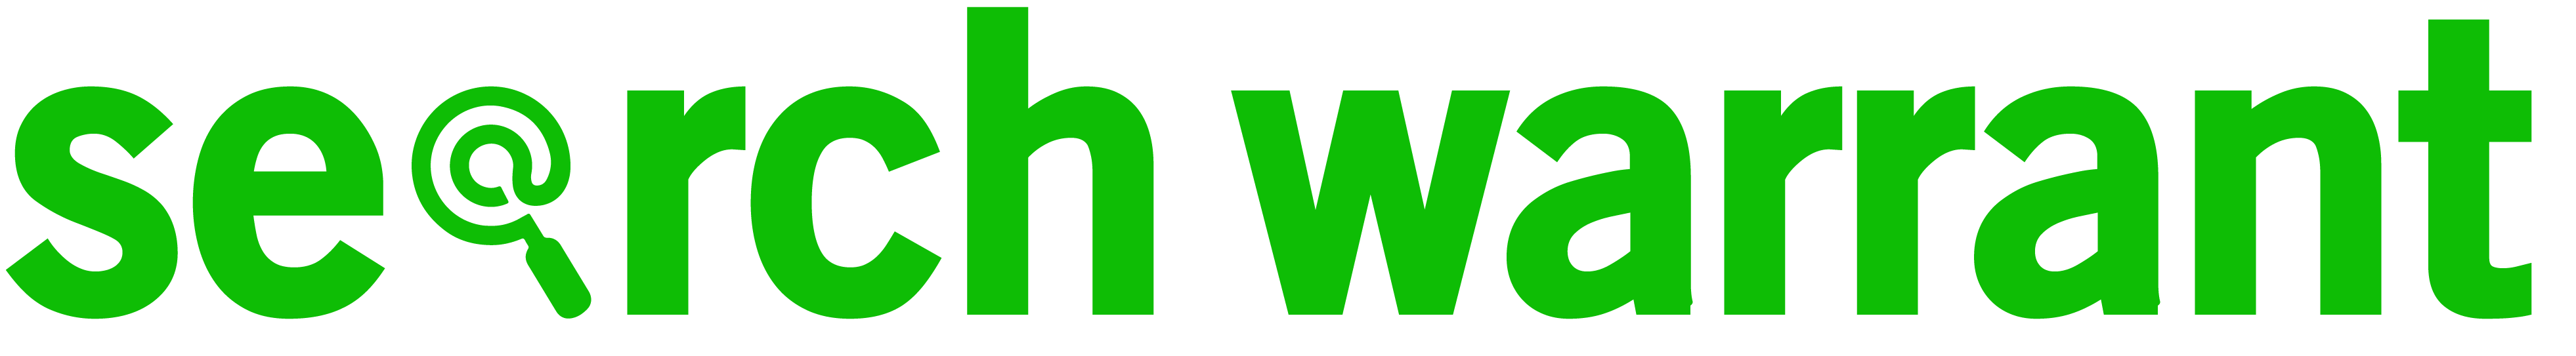 Search Warrant Logo